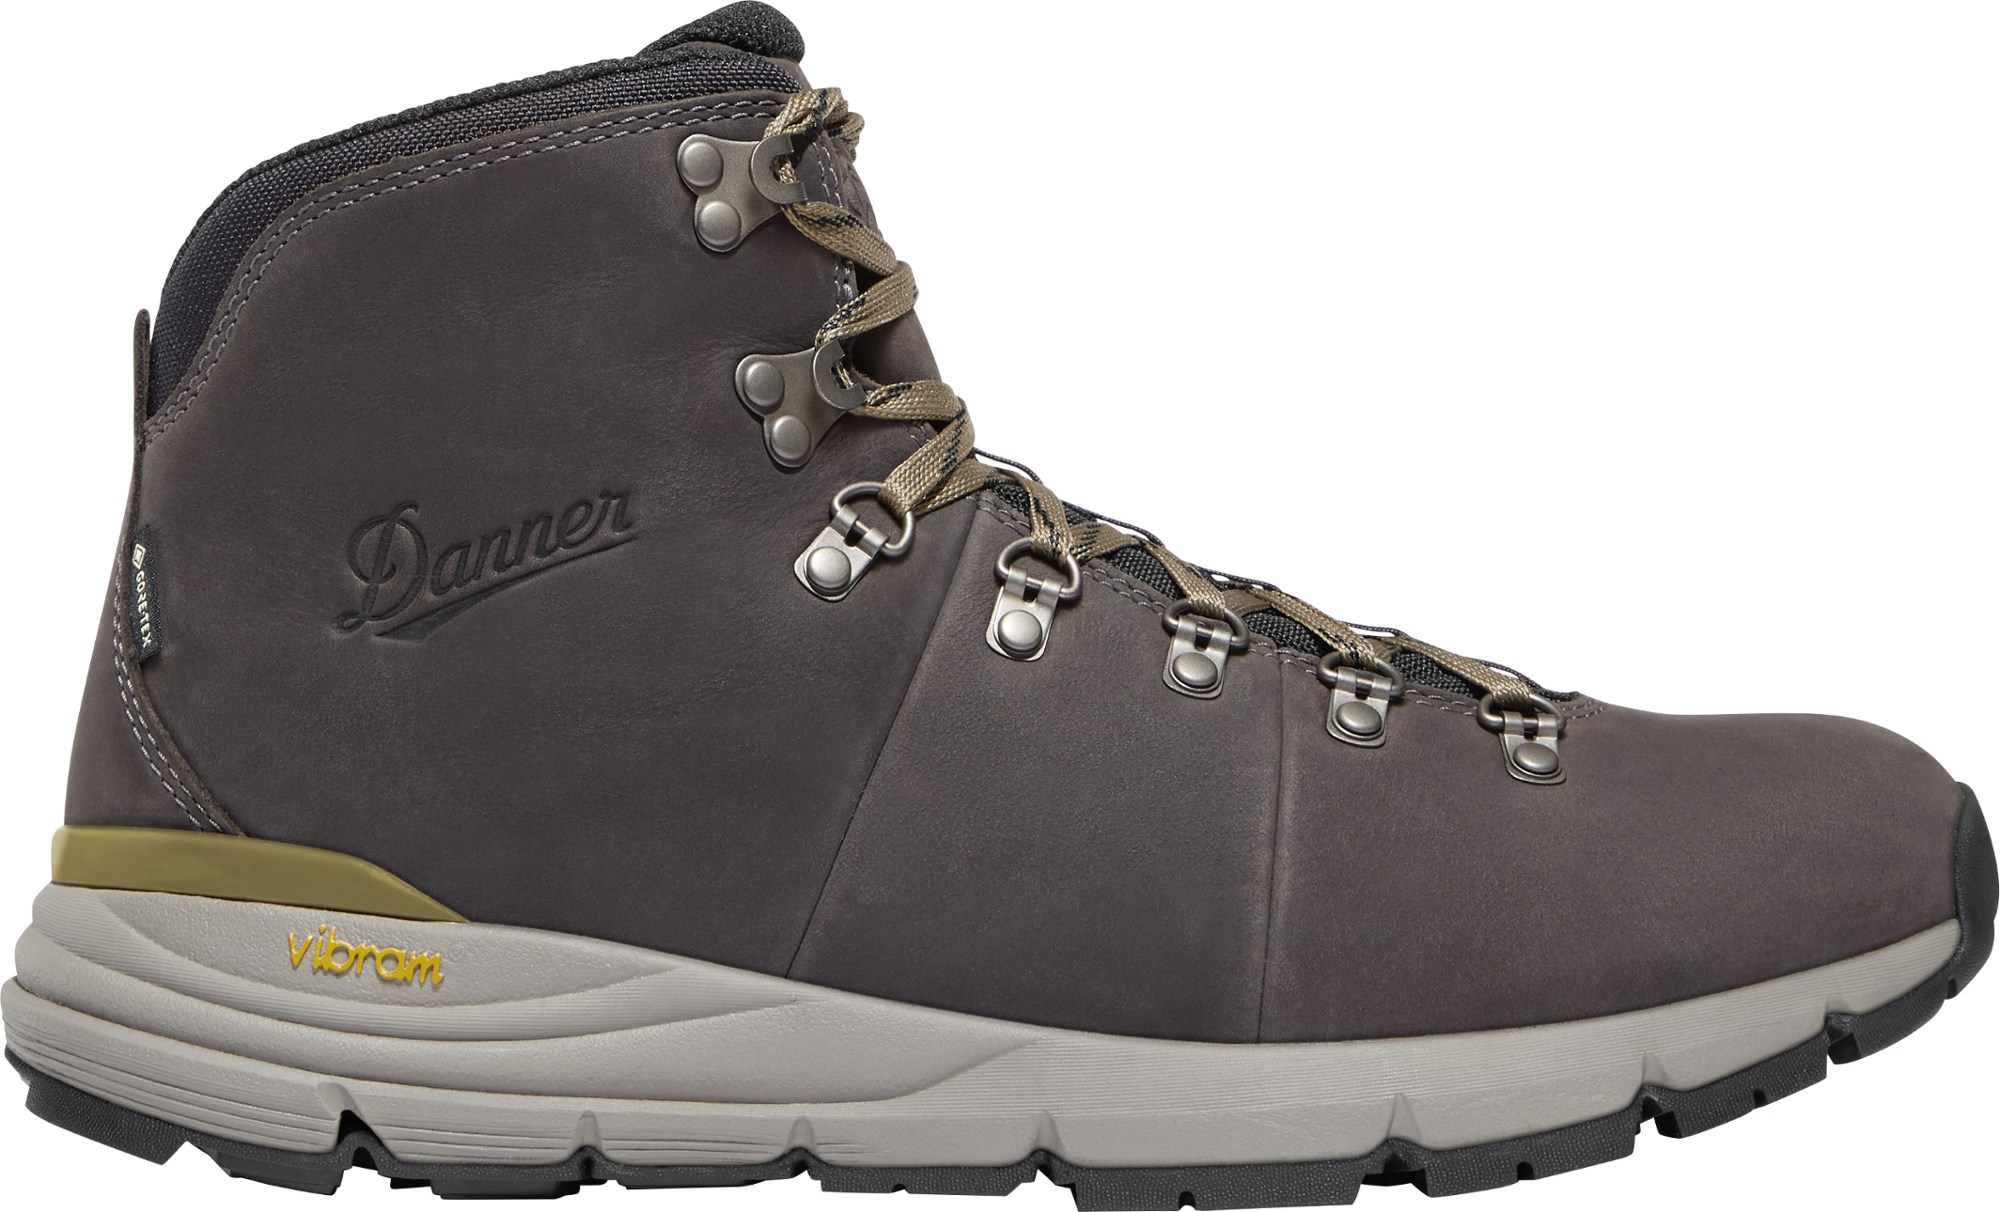 Походные ботинки Mountain 600 Leaf GORE-TEX — мужские Danner, серый